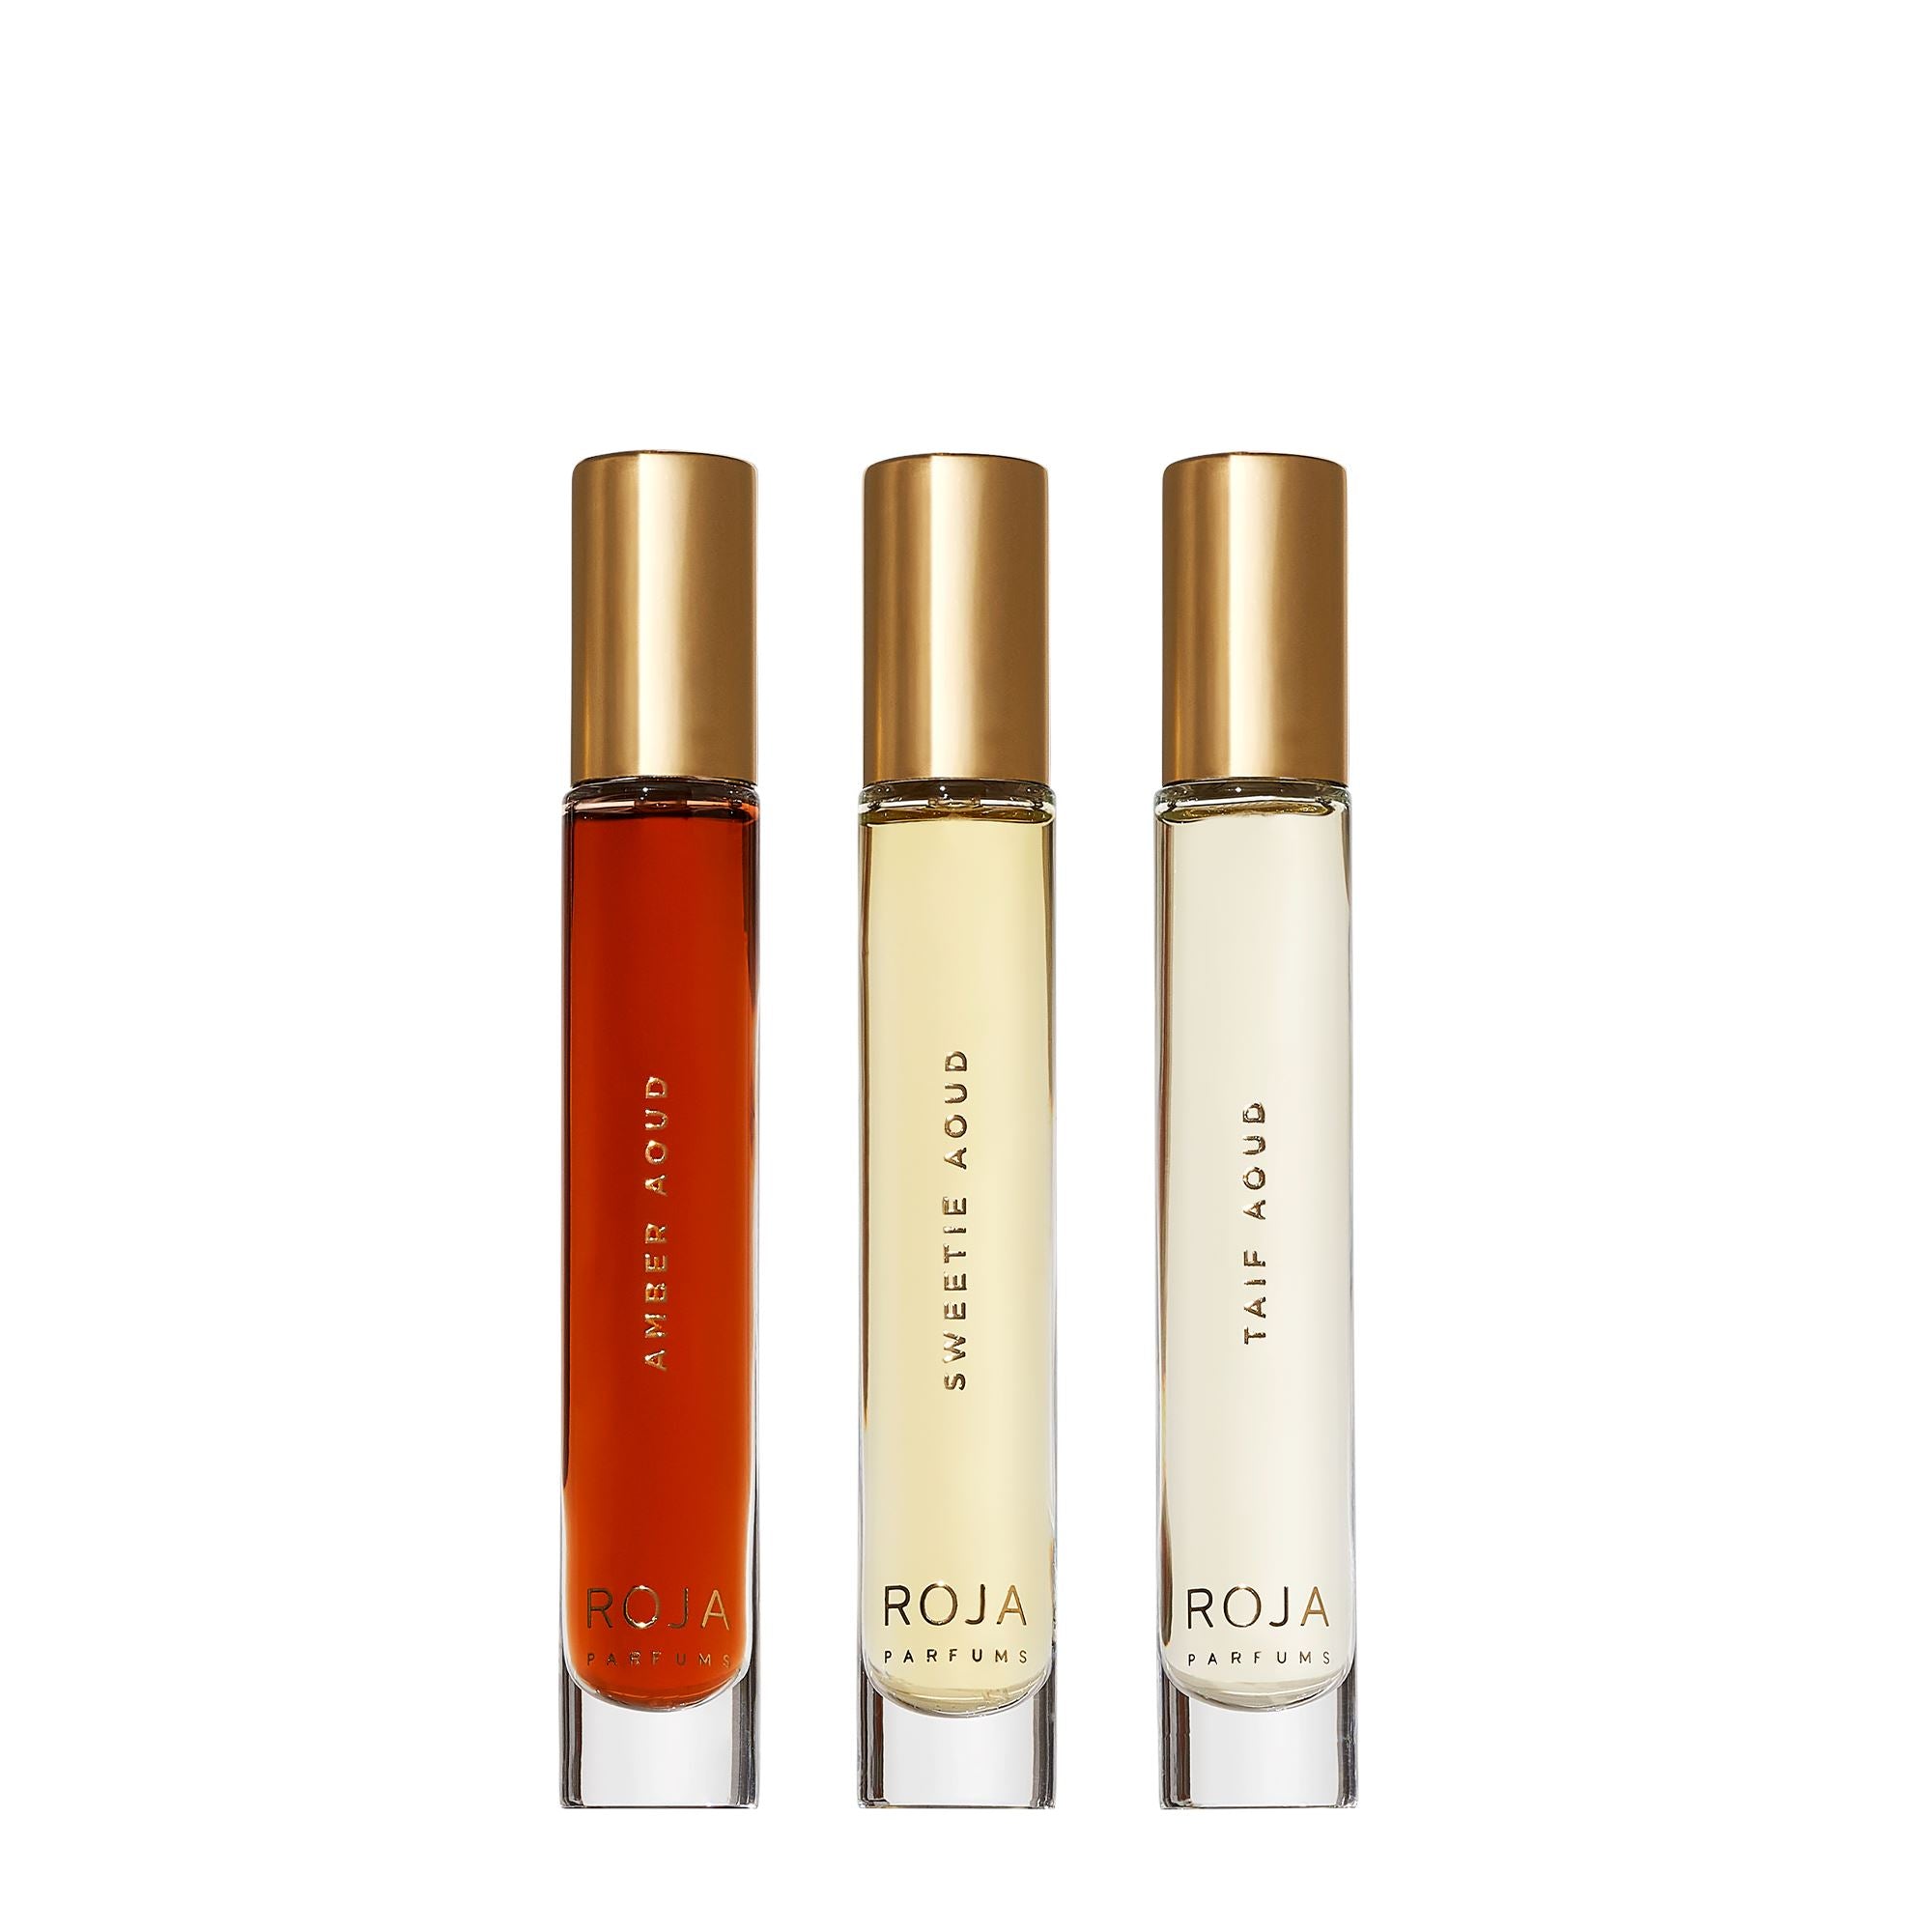 Aoud Travel Sprays Roja | Travel Size Parfums | Sets Perfume